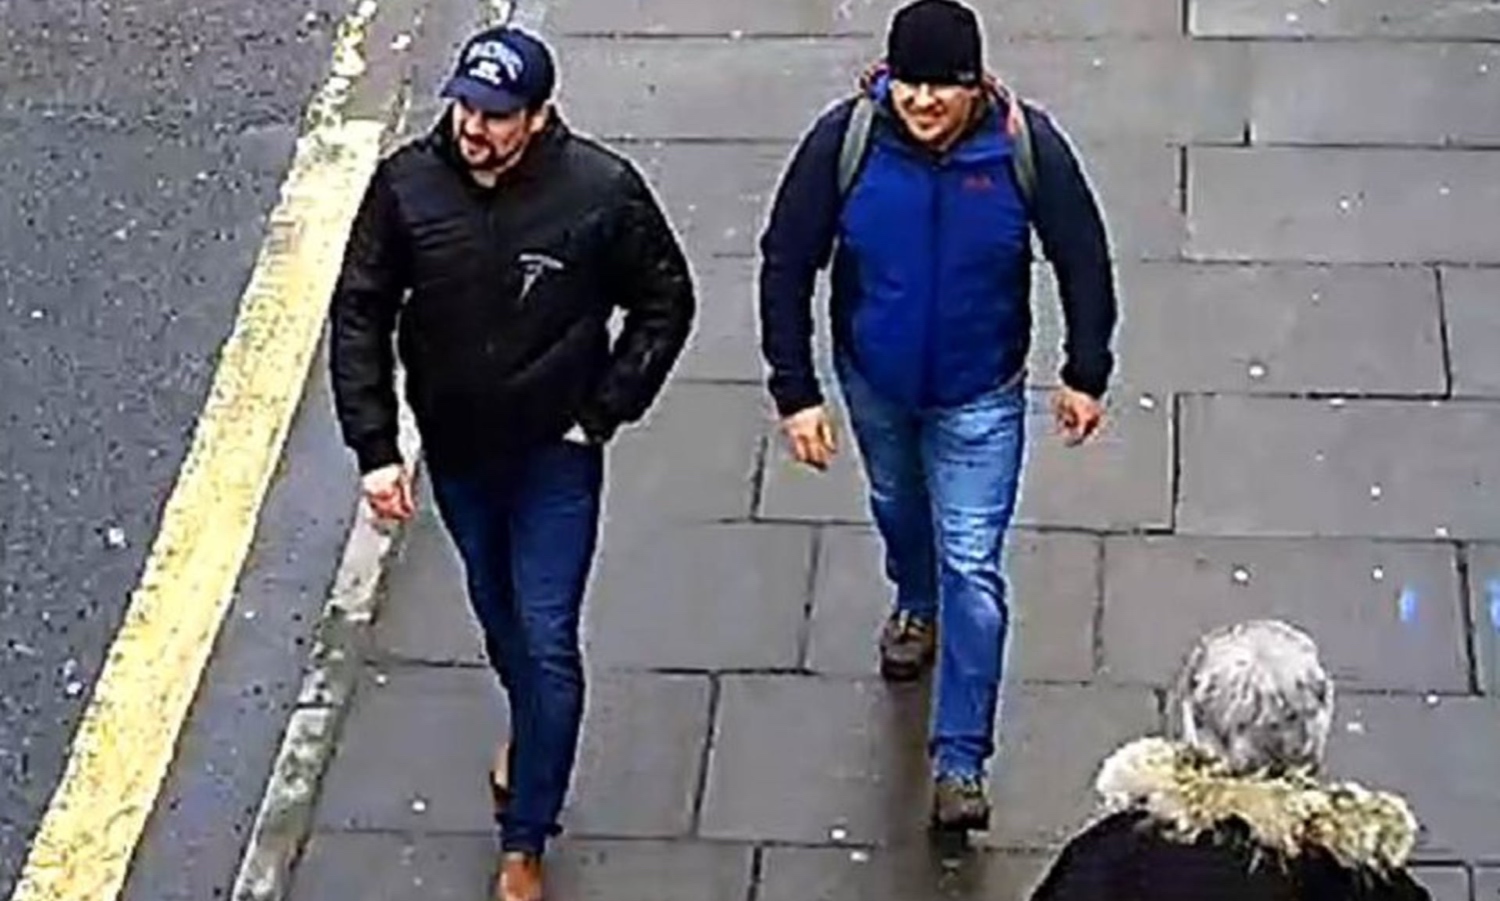 Novichok suspects Alexander Petrov and Ruslan Boshirov seen on CCTV on Fisherton Road, Salisbury, on 4 March 2018.